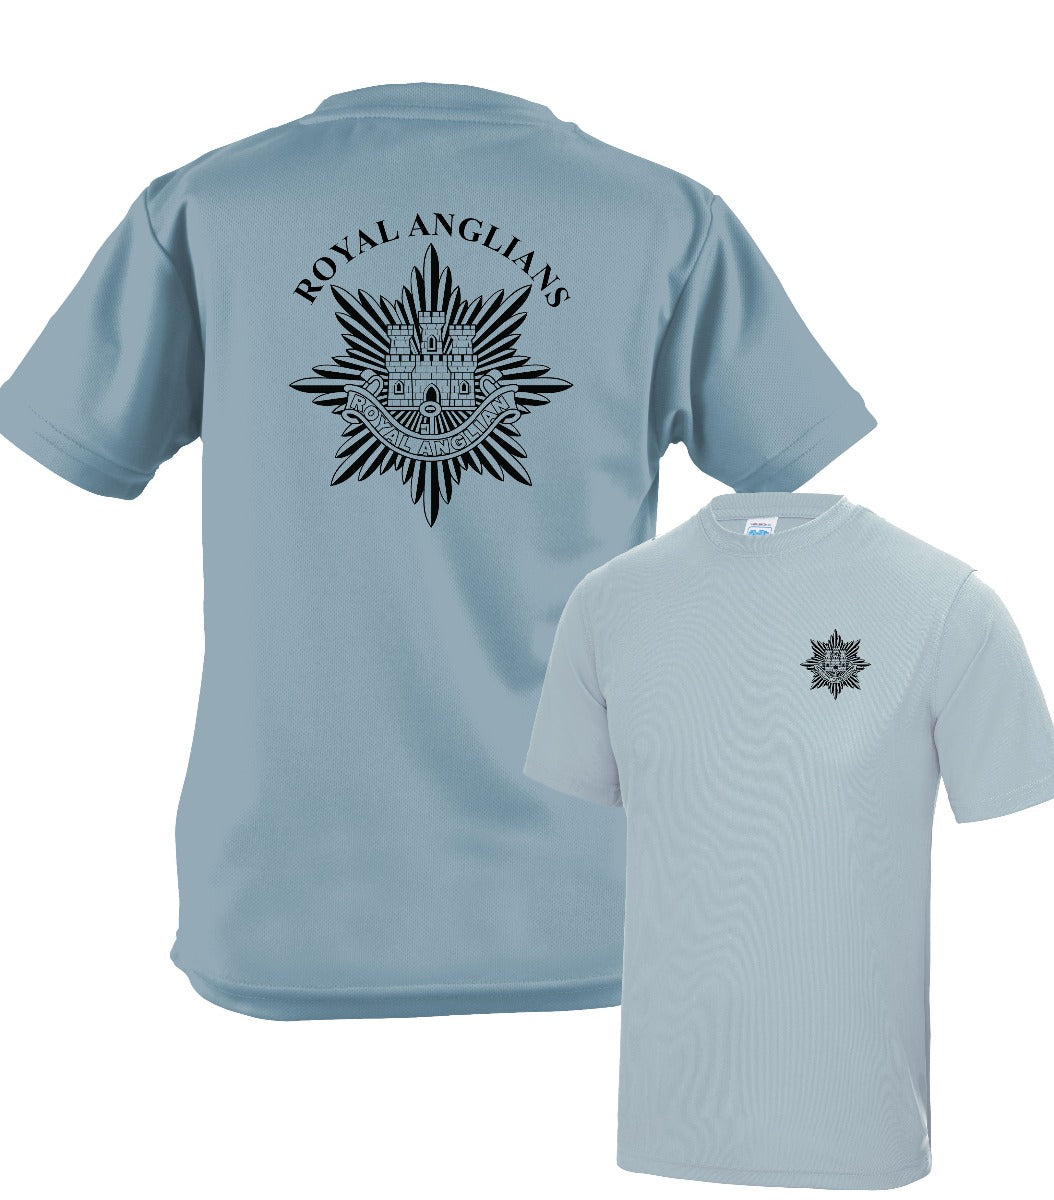 Double Printed Royal Anglian Wicking T-Shirt